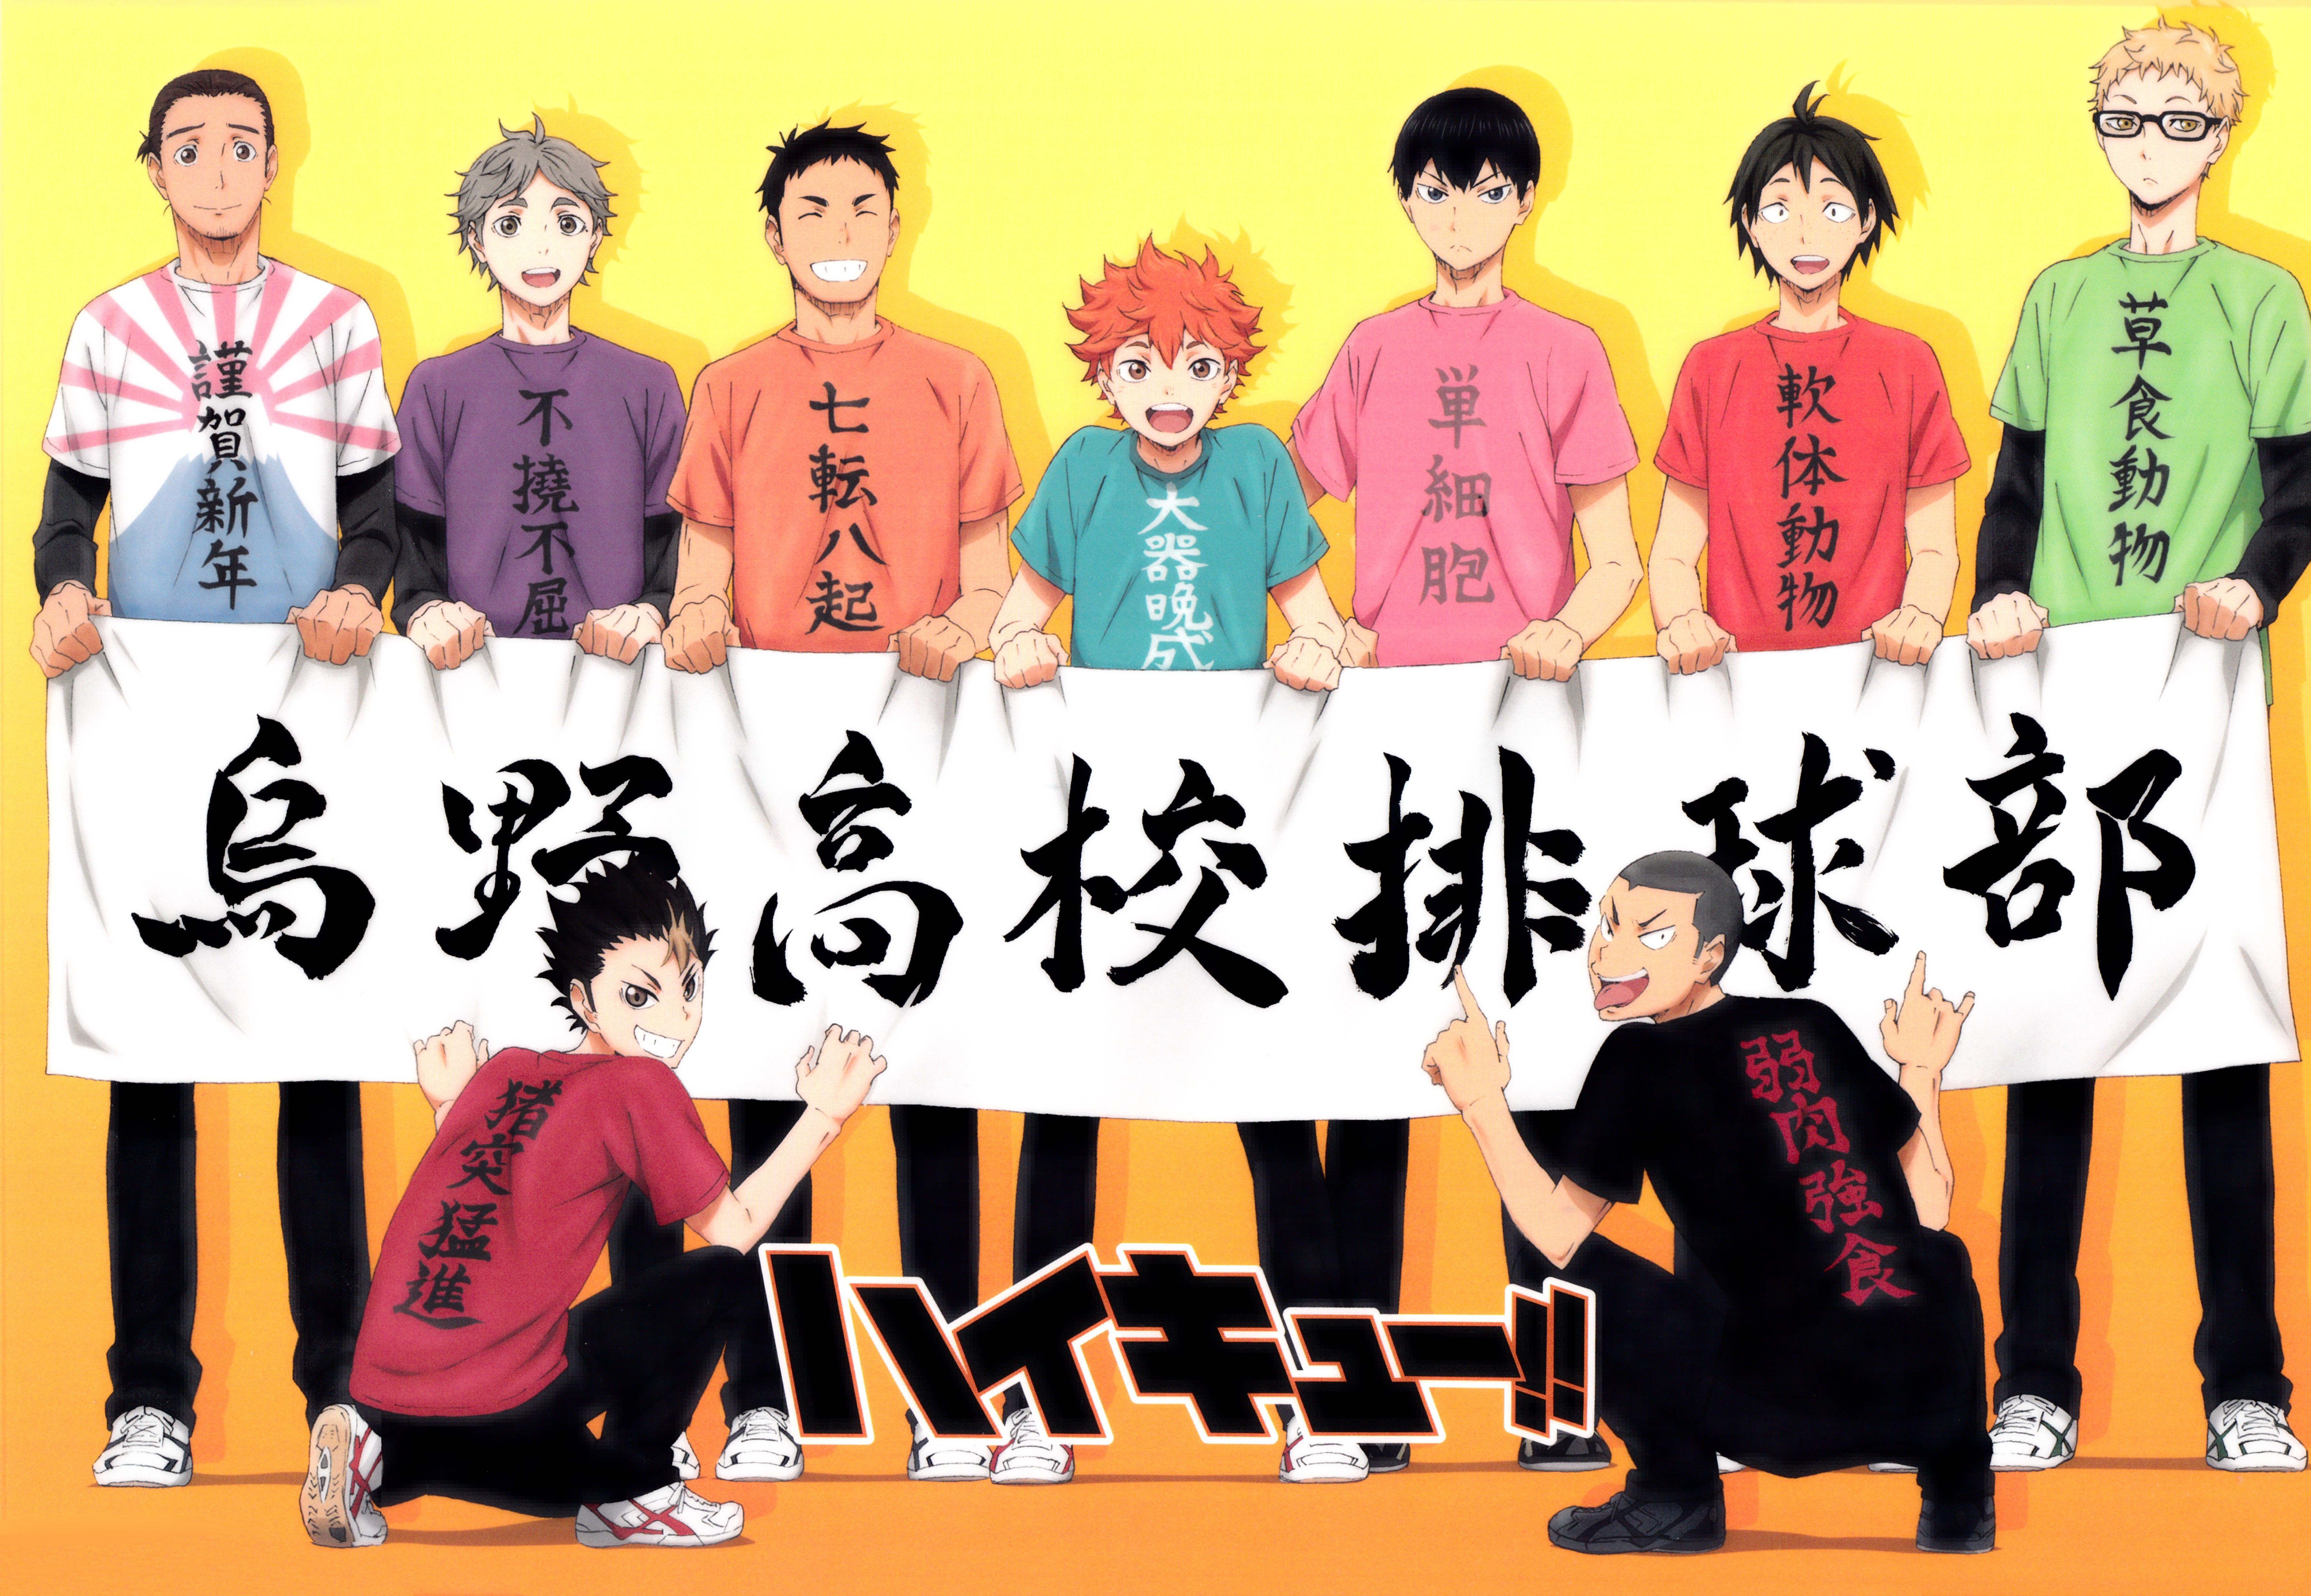 Smile group Haikyuu!! Series Yuu Nishinoya Character Daichi Sawamura Character wallpaperx4960